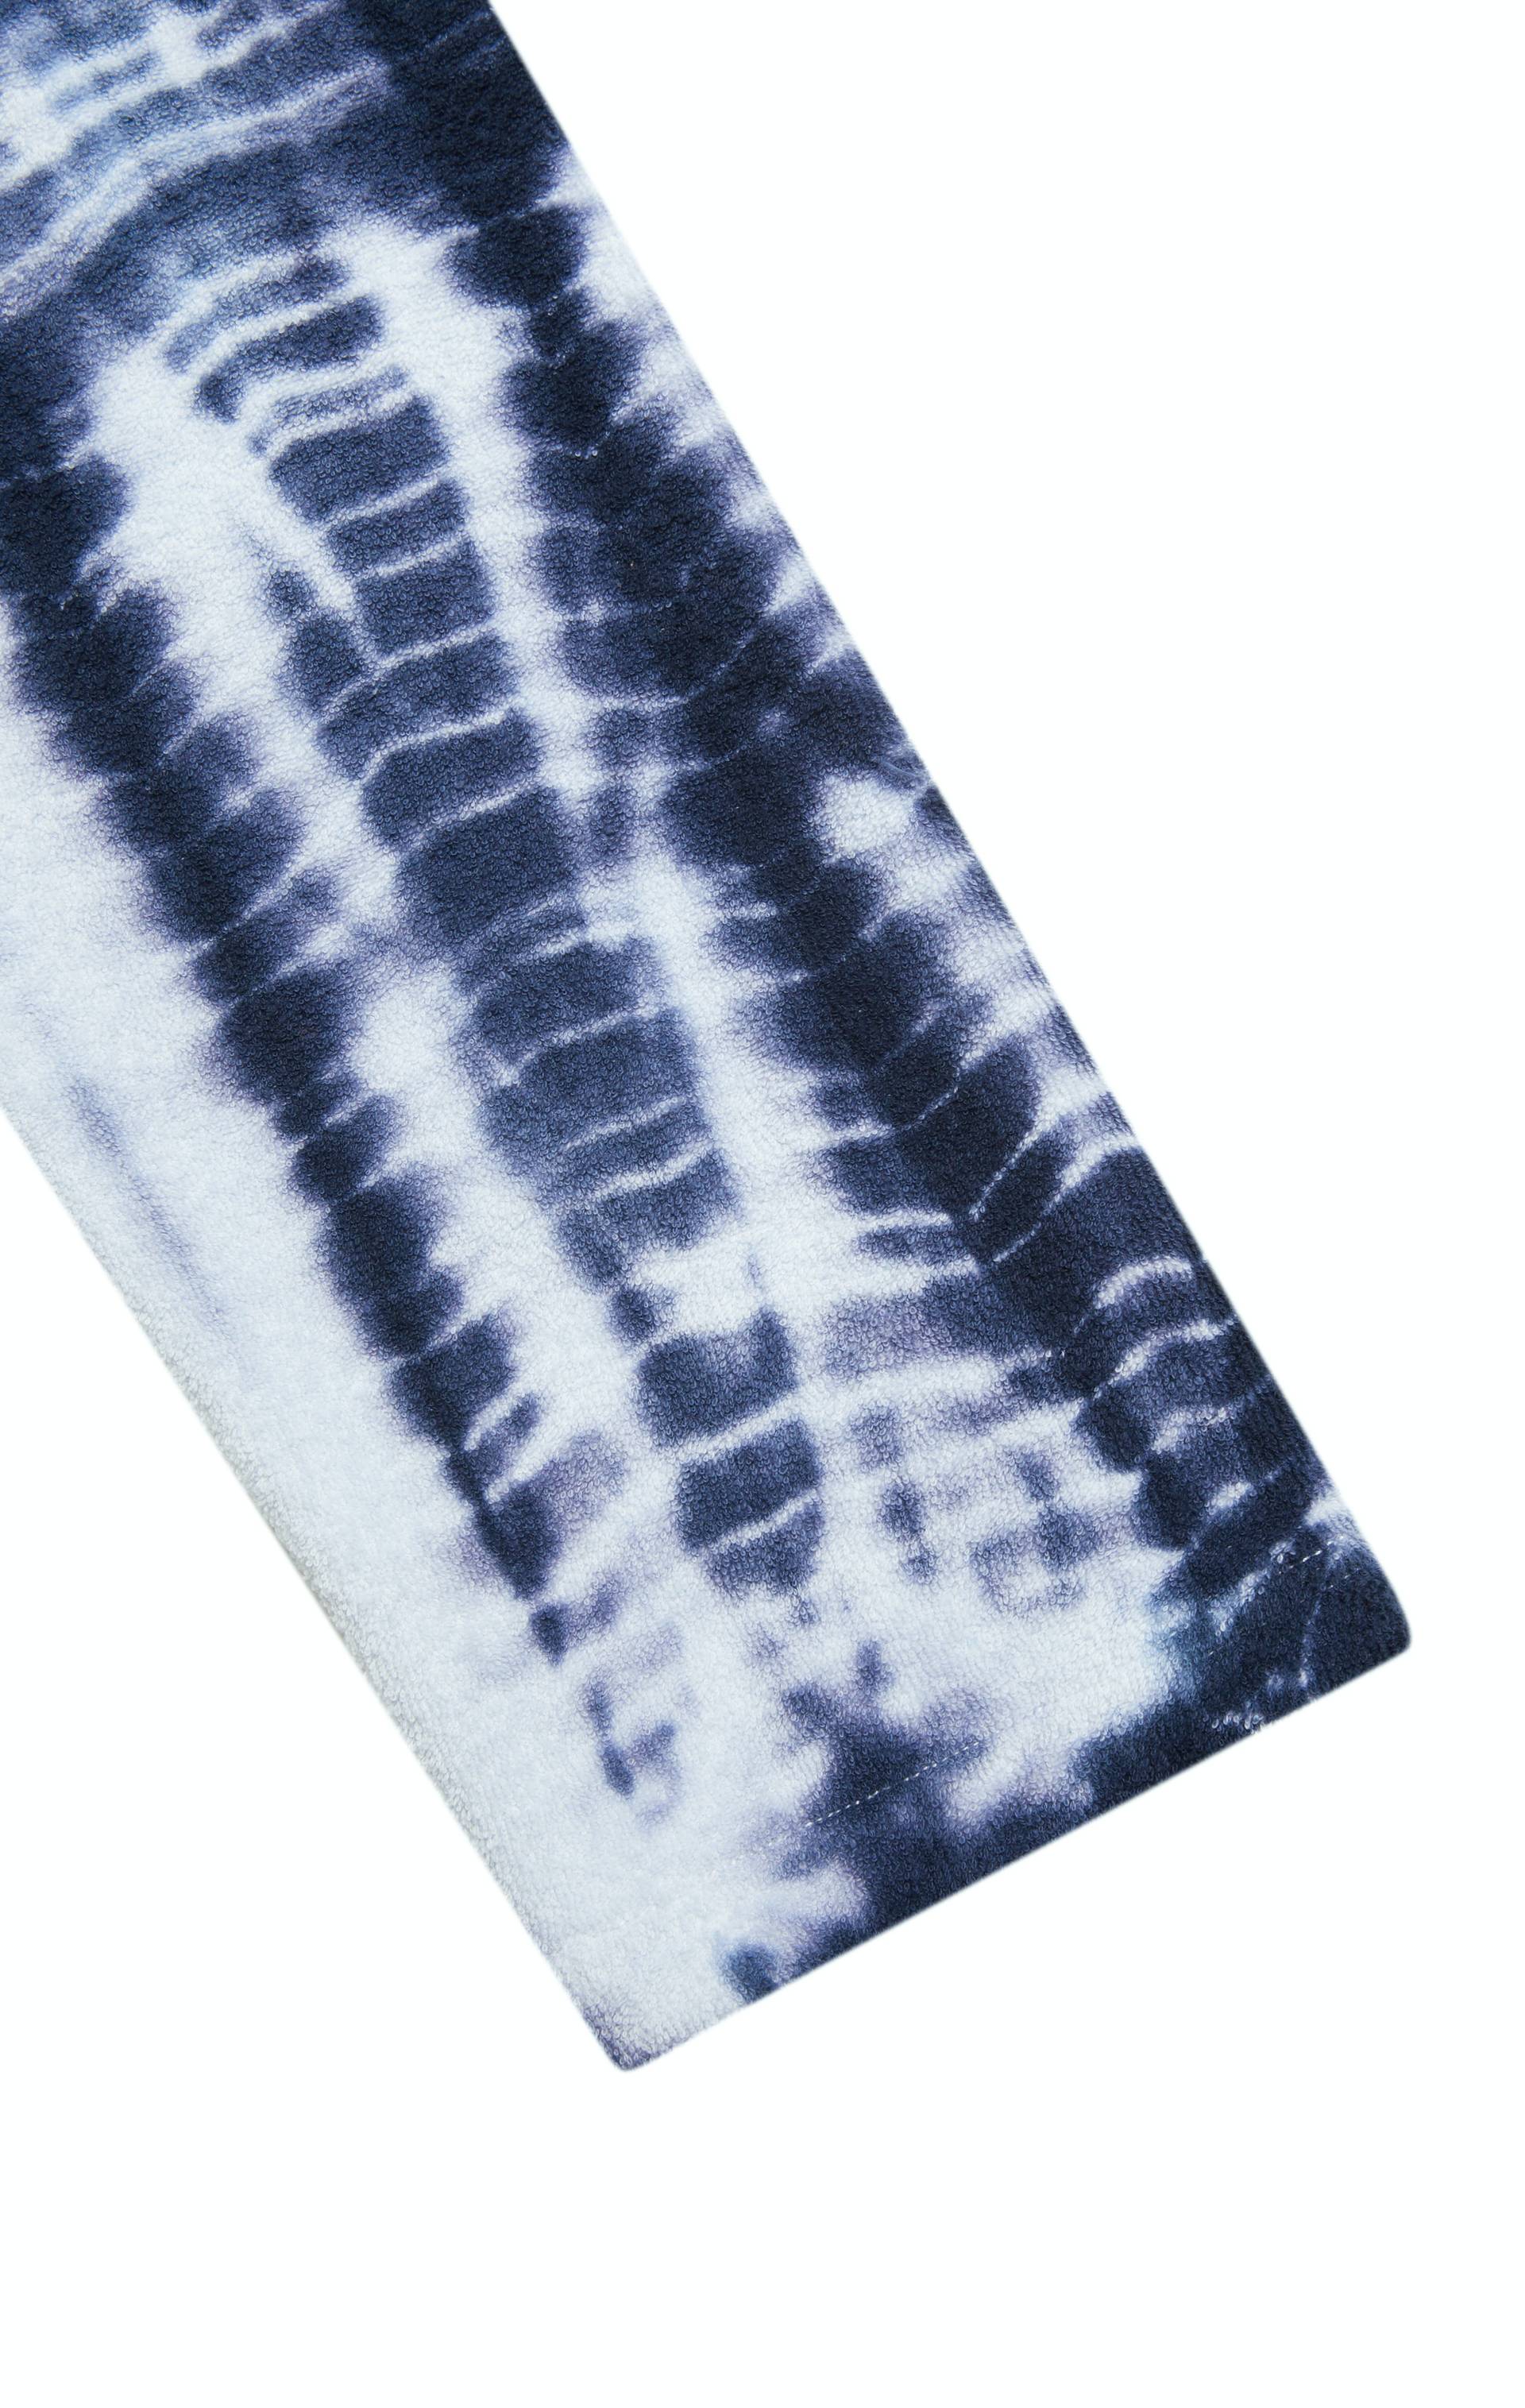 Onepiece Towel Club X Onepiece Towel Jumpsuit Blue Tie Dye - 3